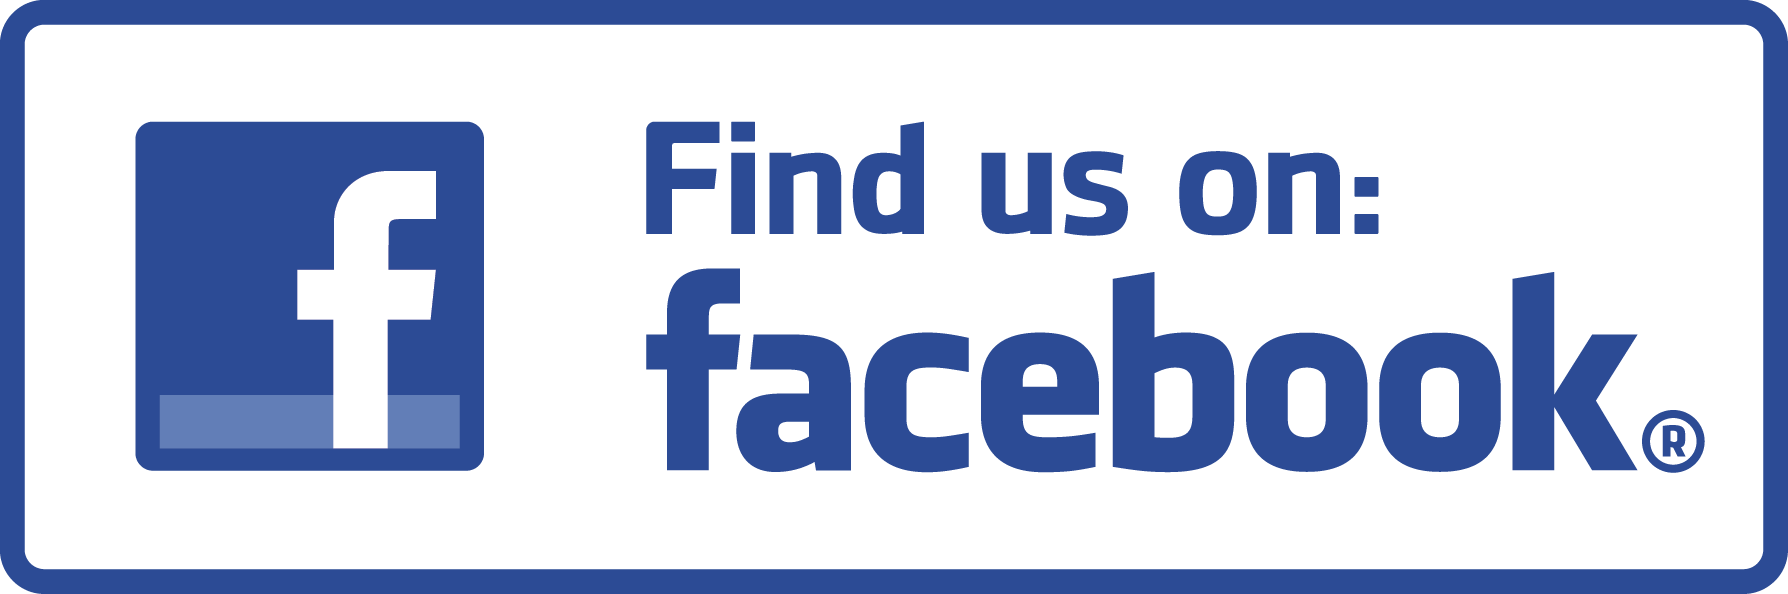 facebook - Download facebook brand vector logos for free